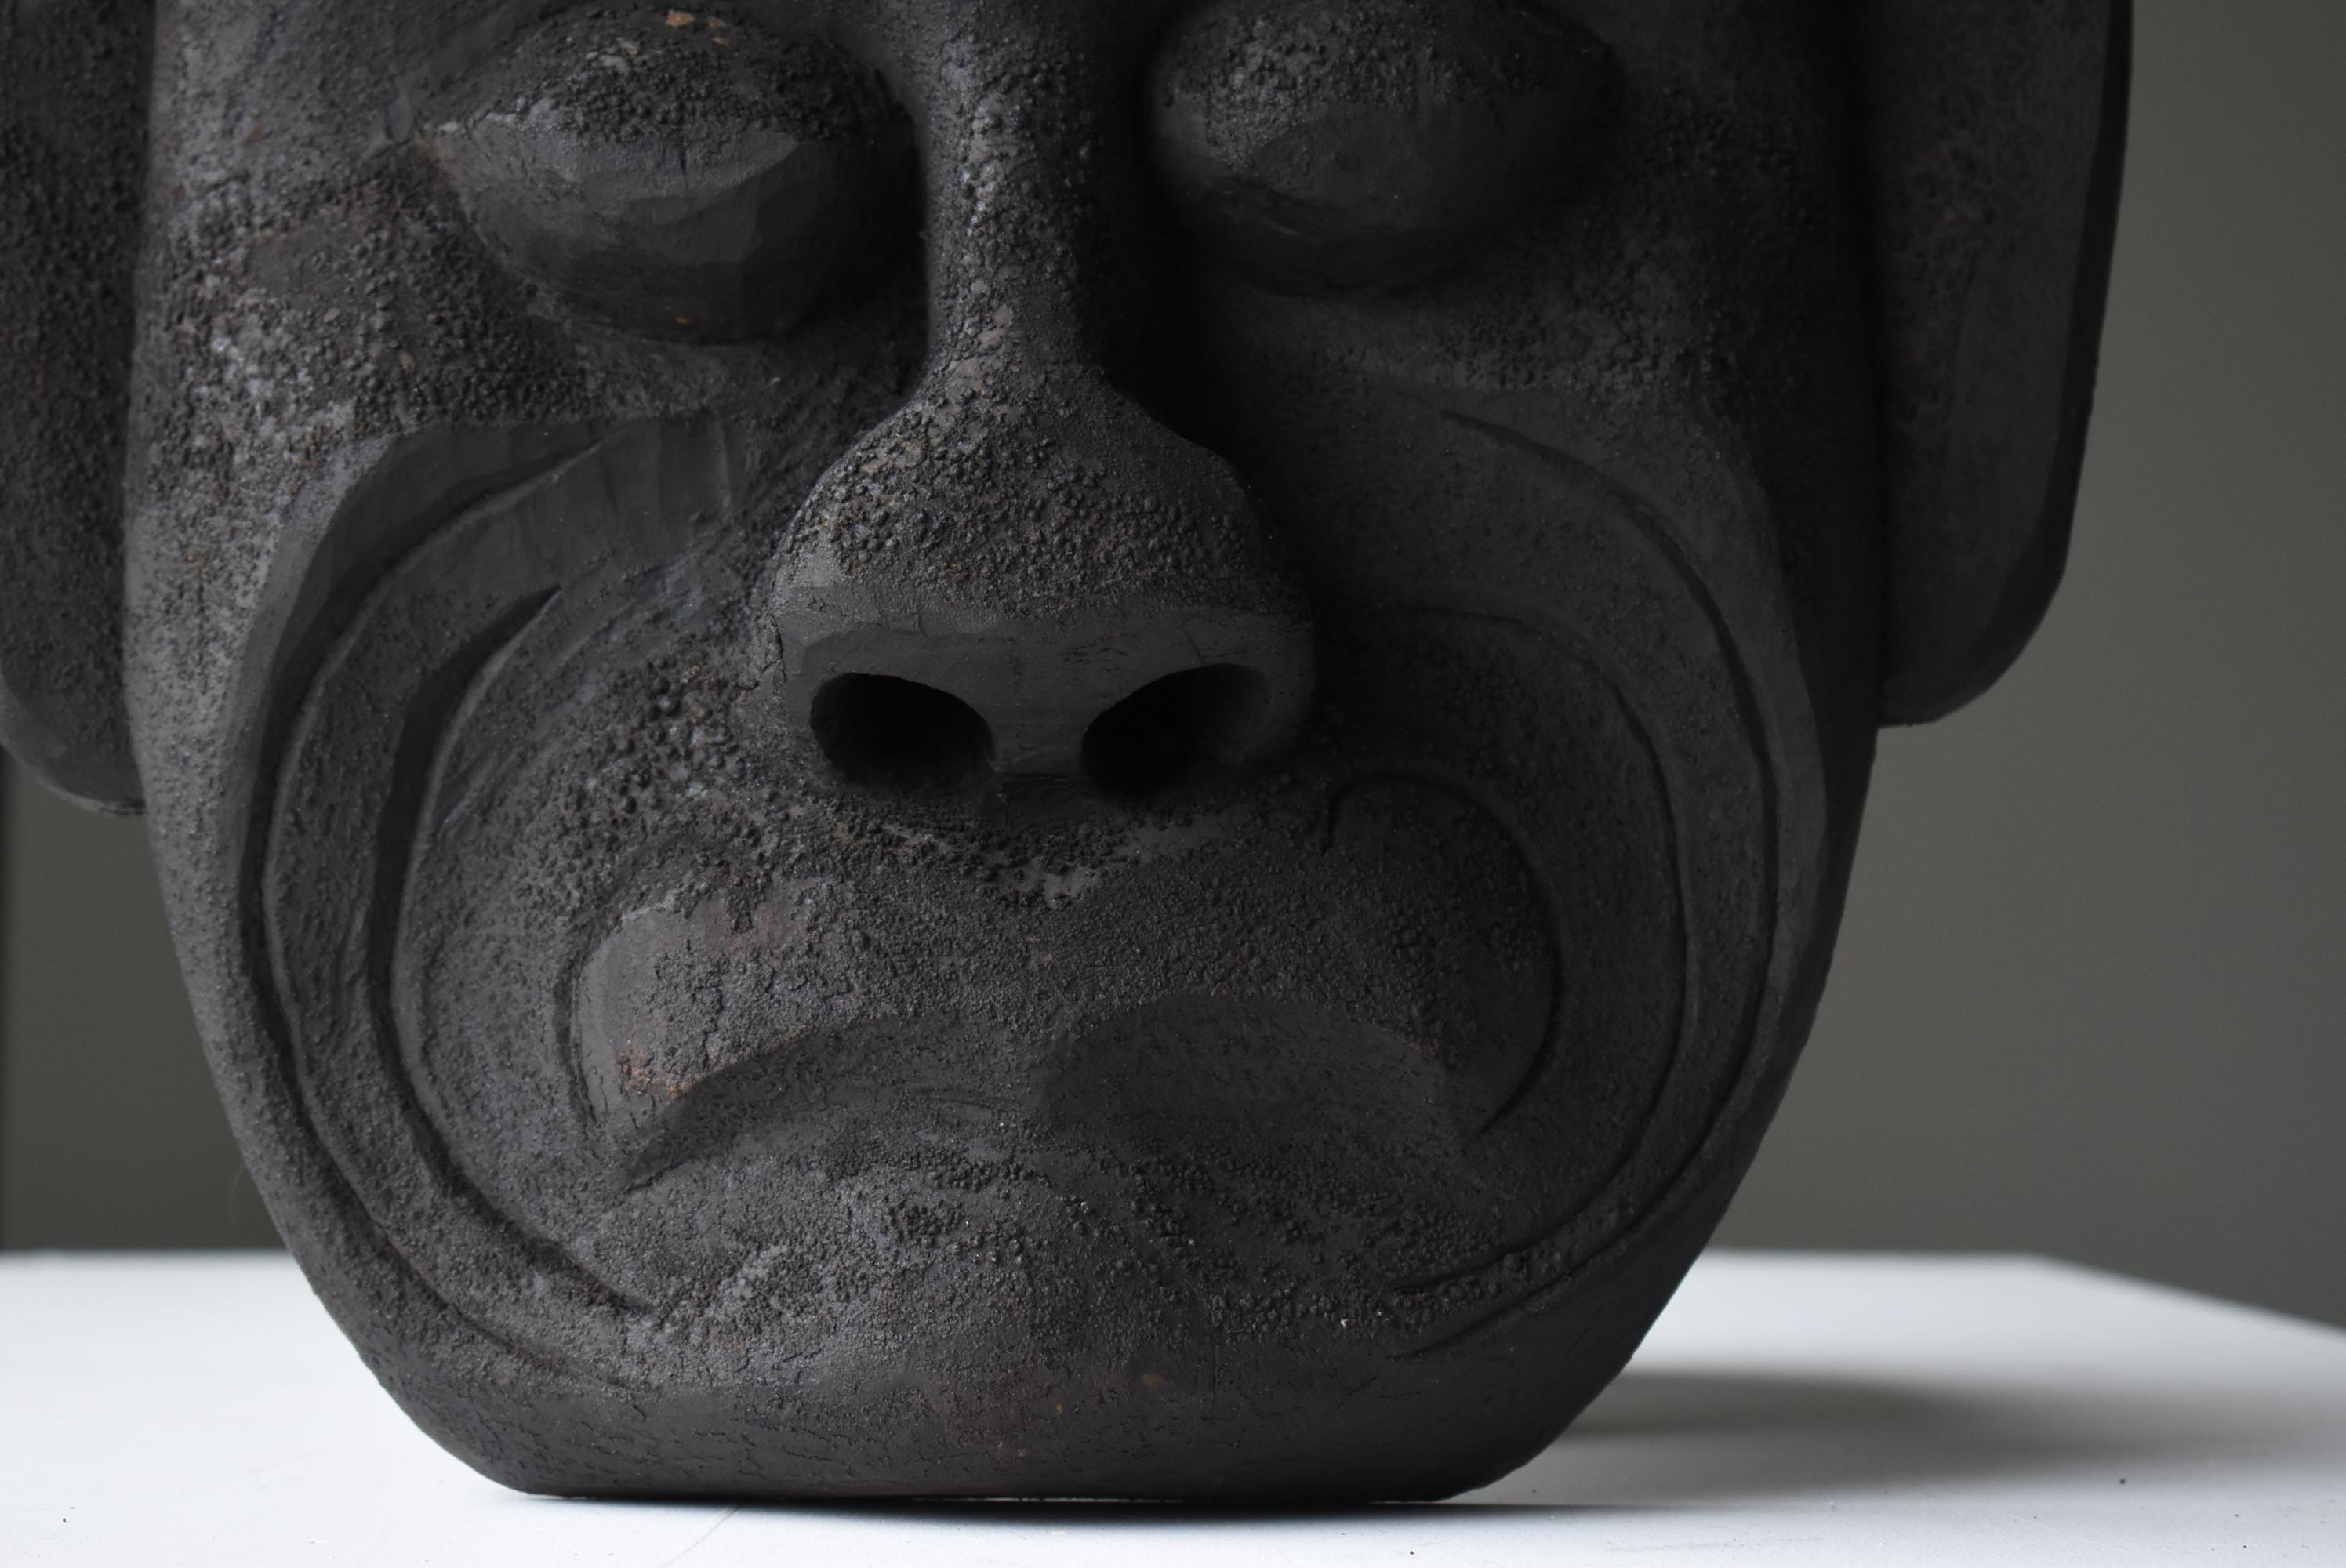 Edo Japanese Old Wood Carving Mask 1800s-1860s/Folk Art Sculpture Wabisabi Object